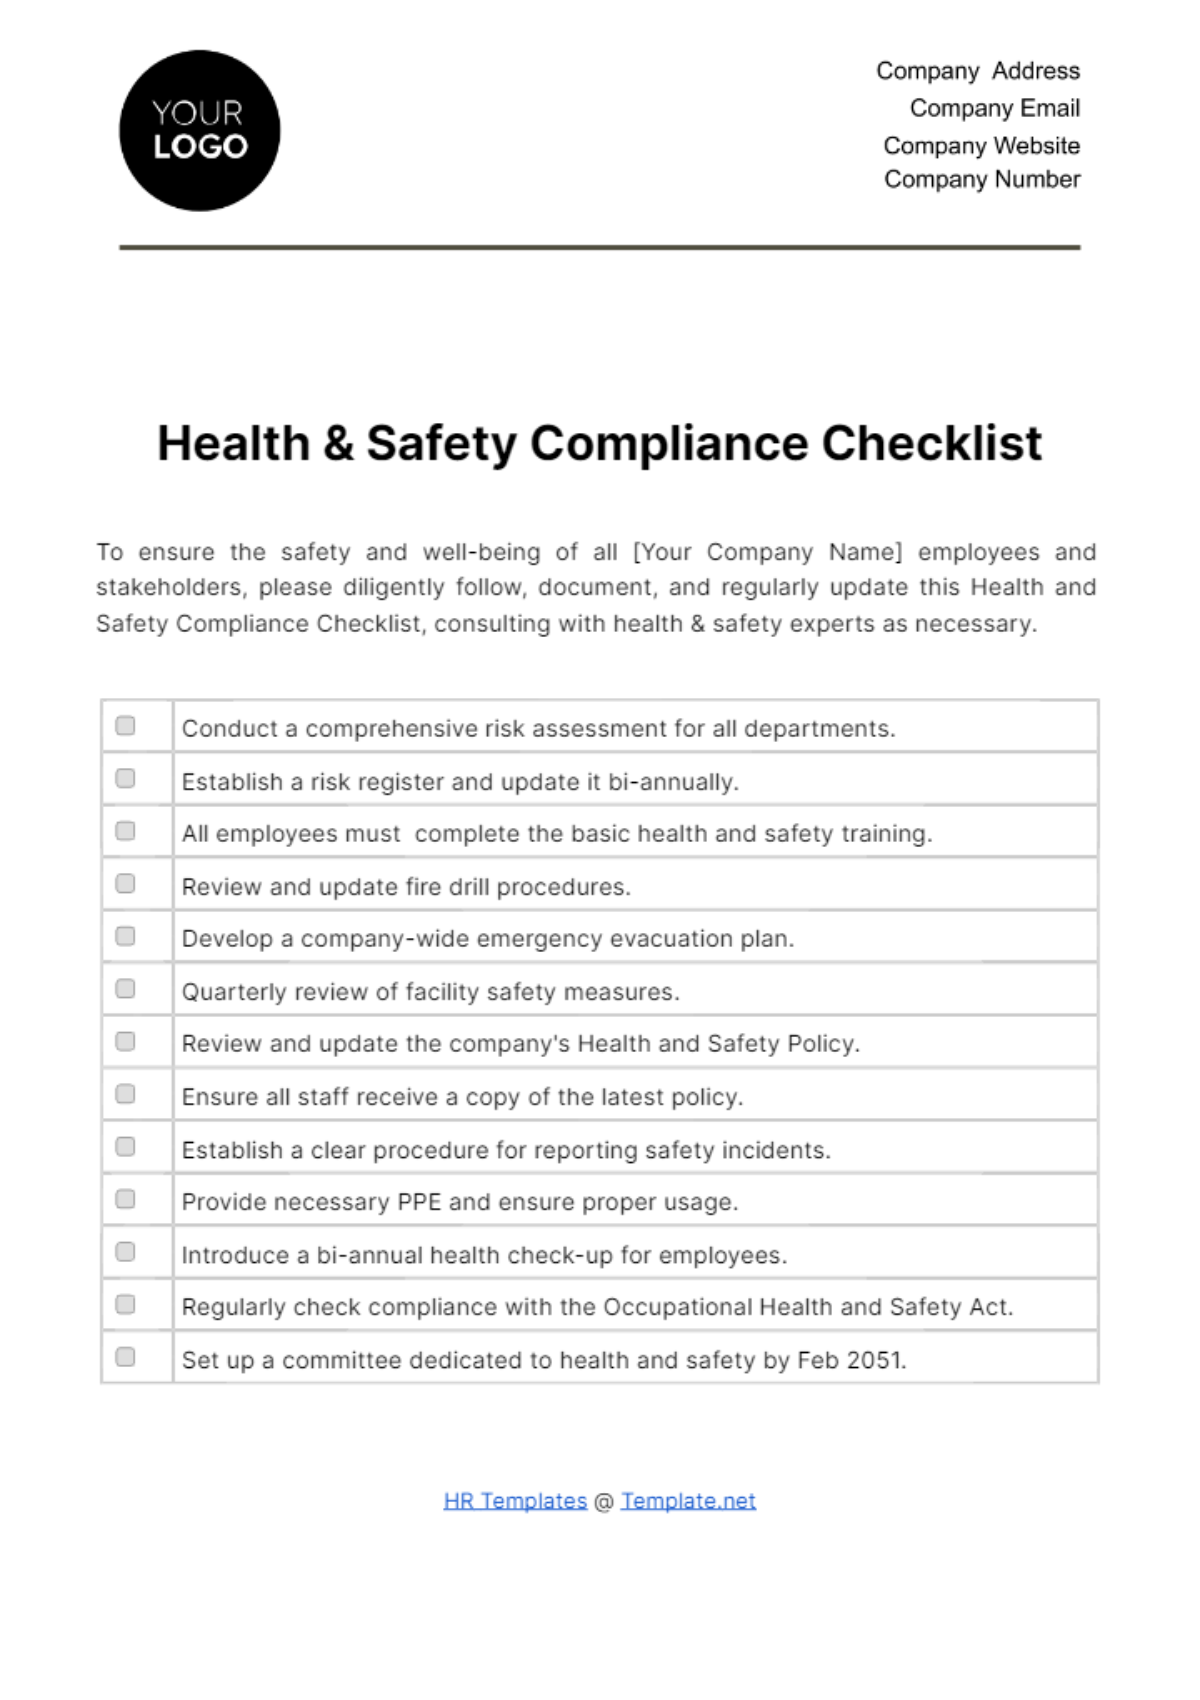 Free Health & Safety Compliance Checklist HR Template